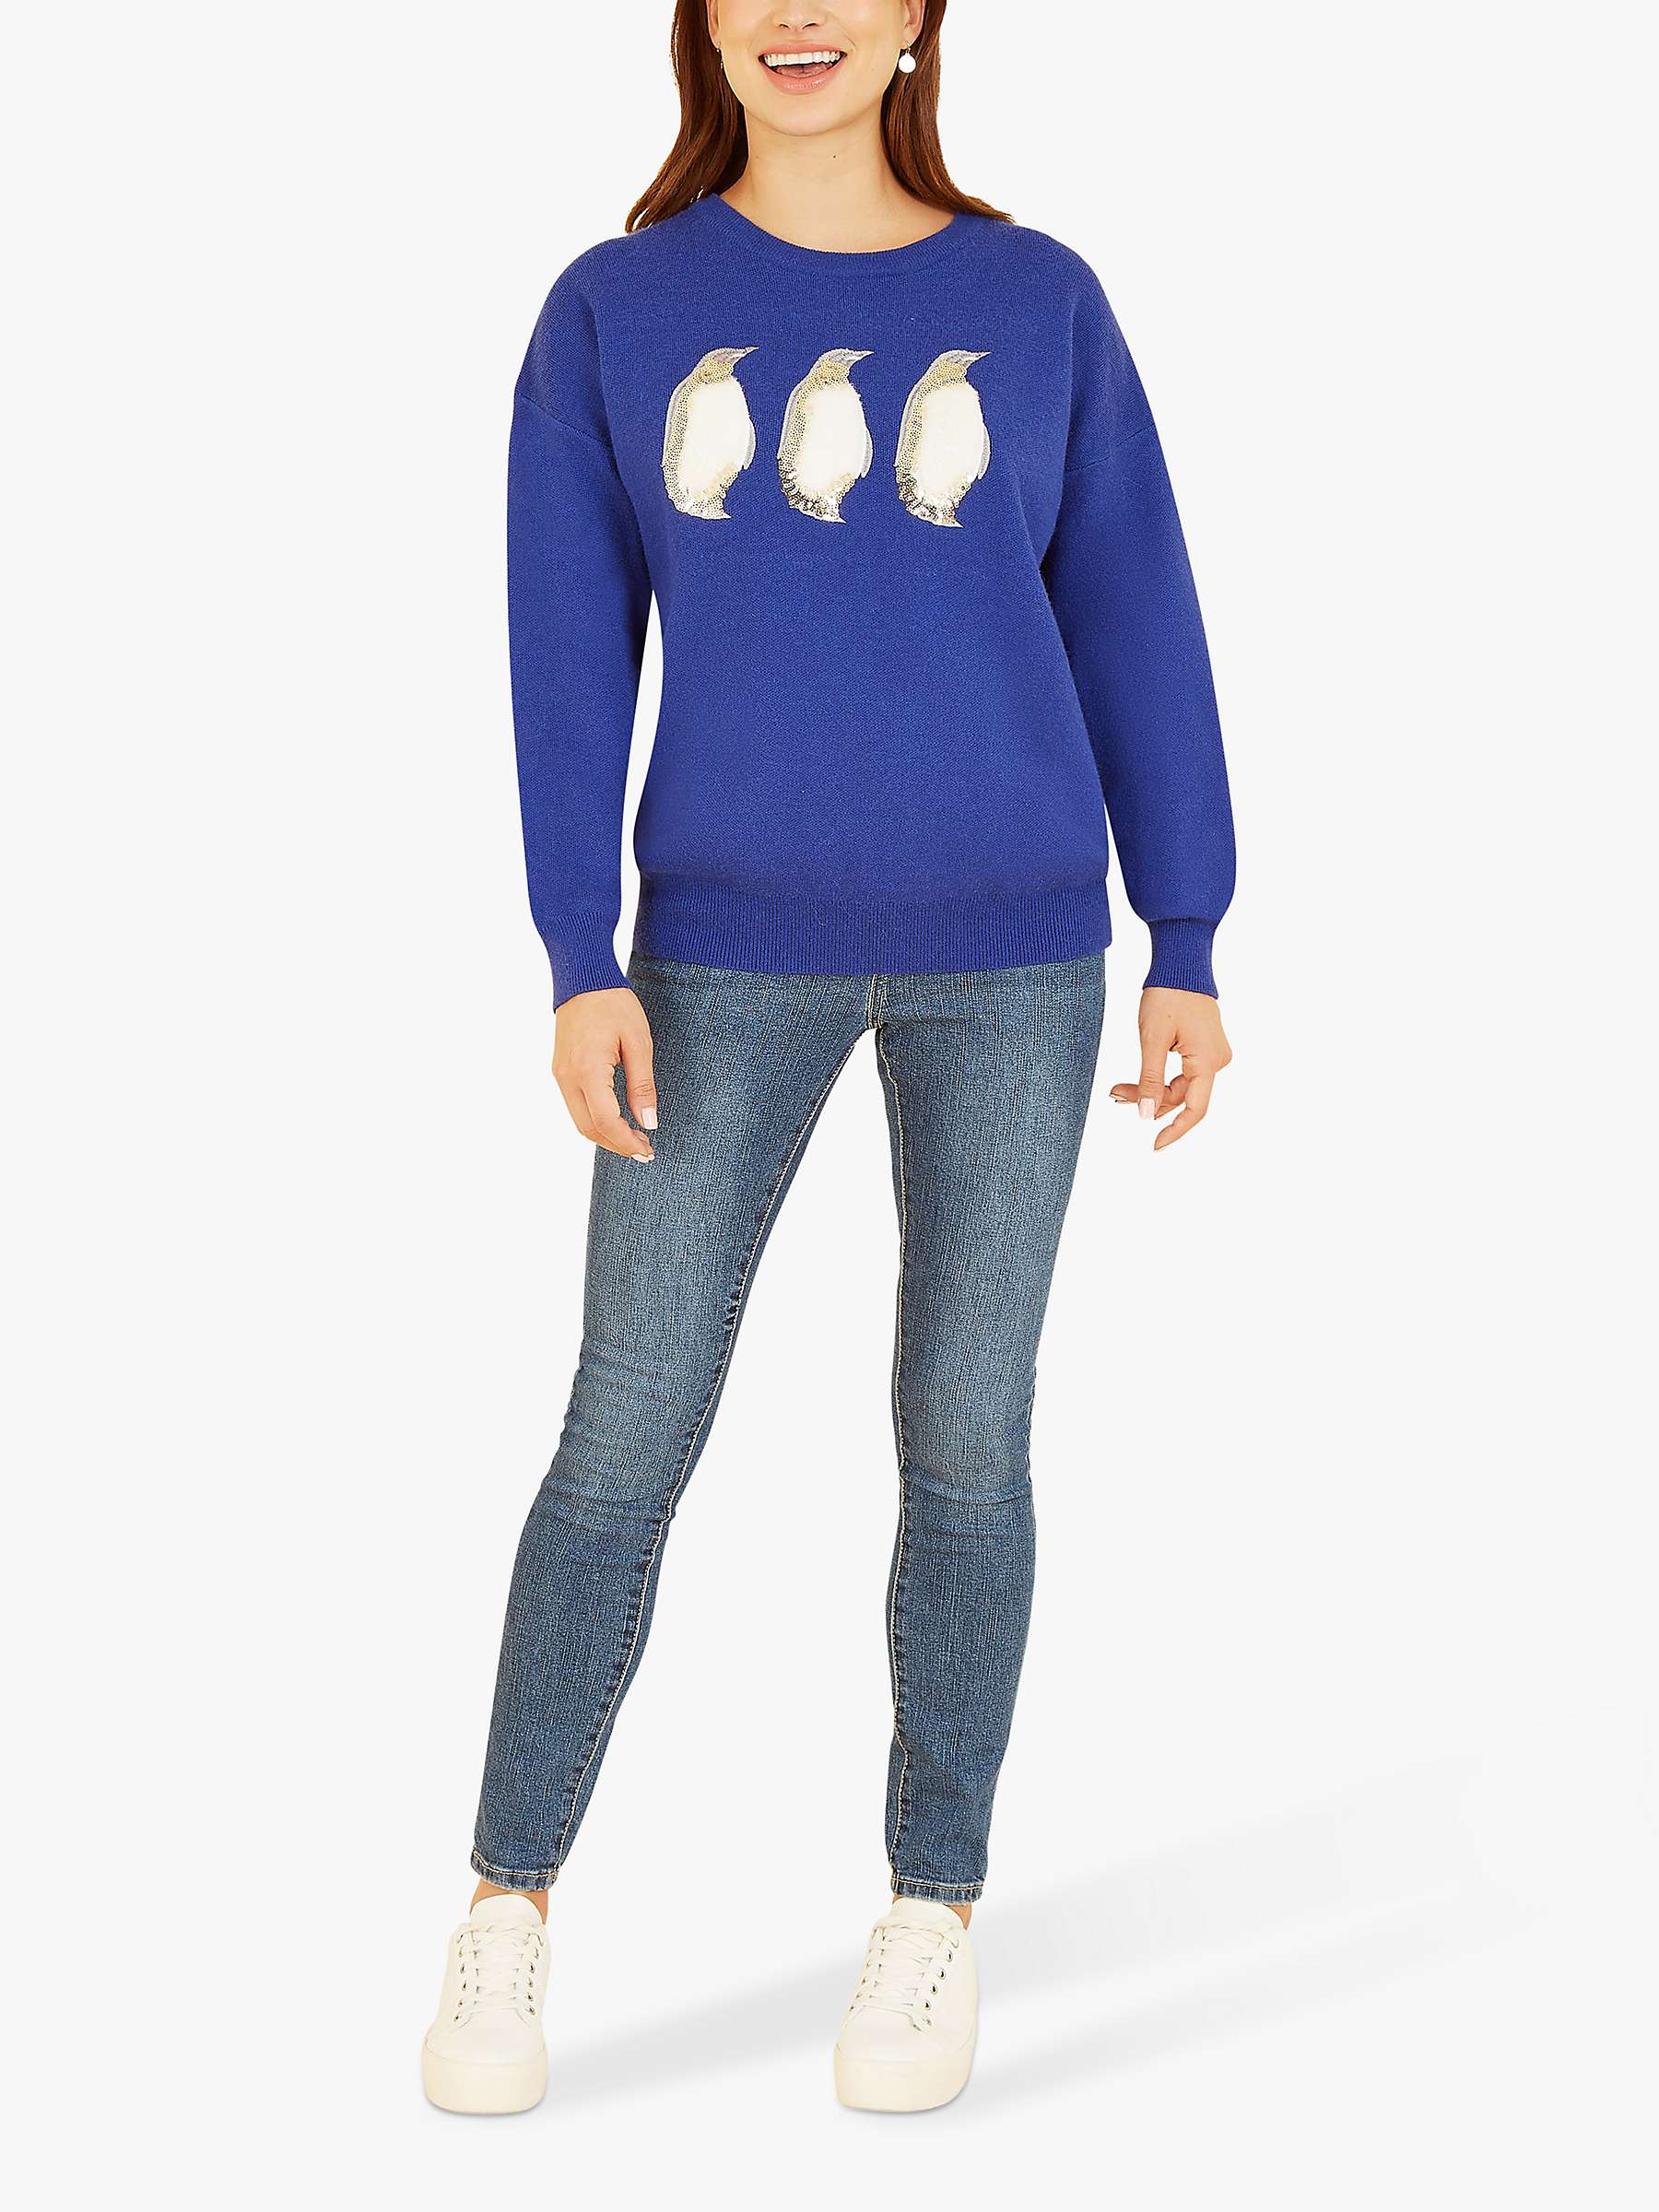 Buy Yumi Festive Penguin Knitted Jumper, Blue Online at johnlewis.com